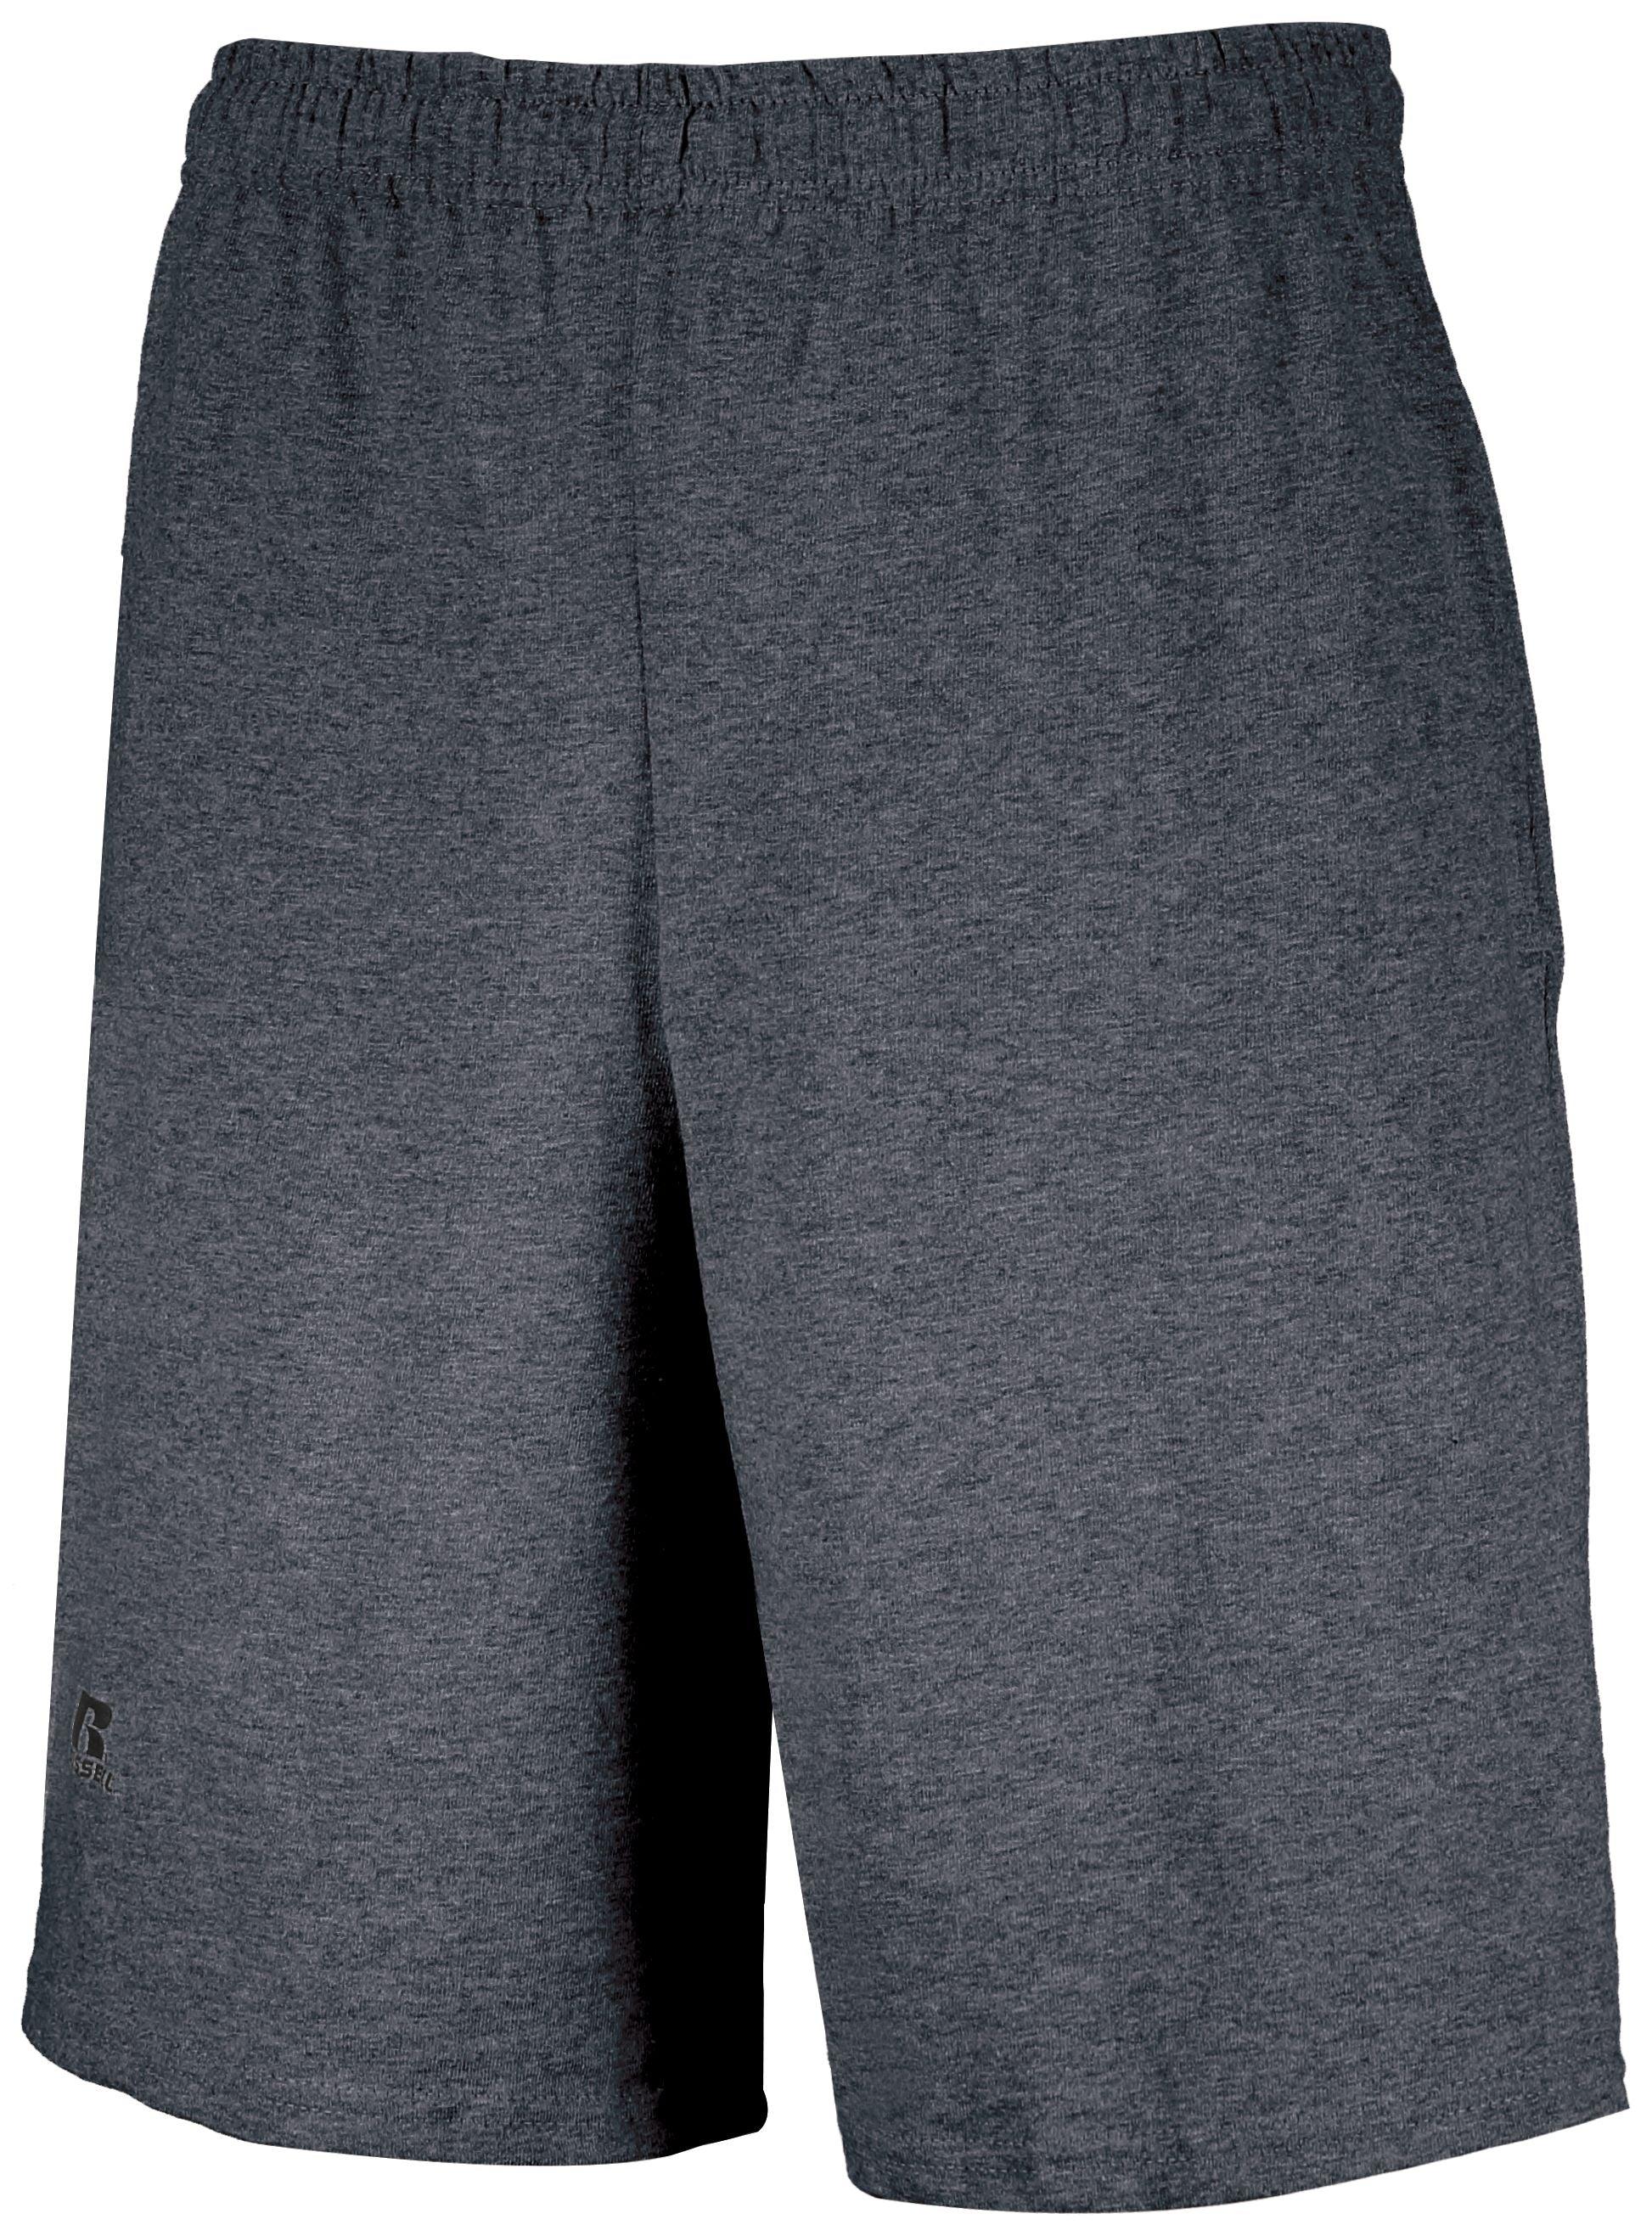 Basic Cotton Pocket Shorts - Dresses Max